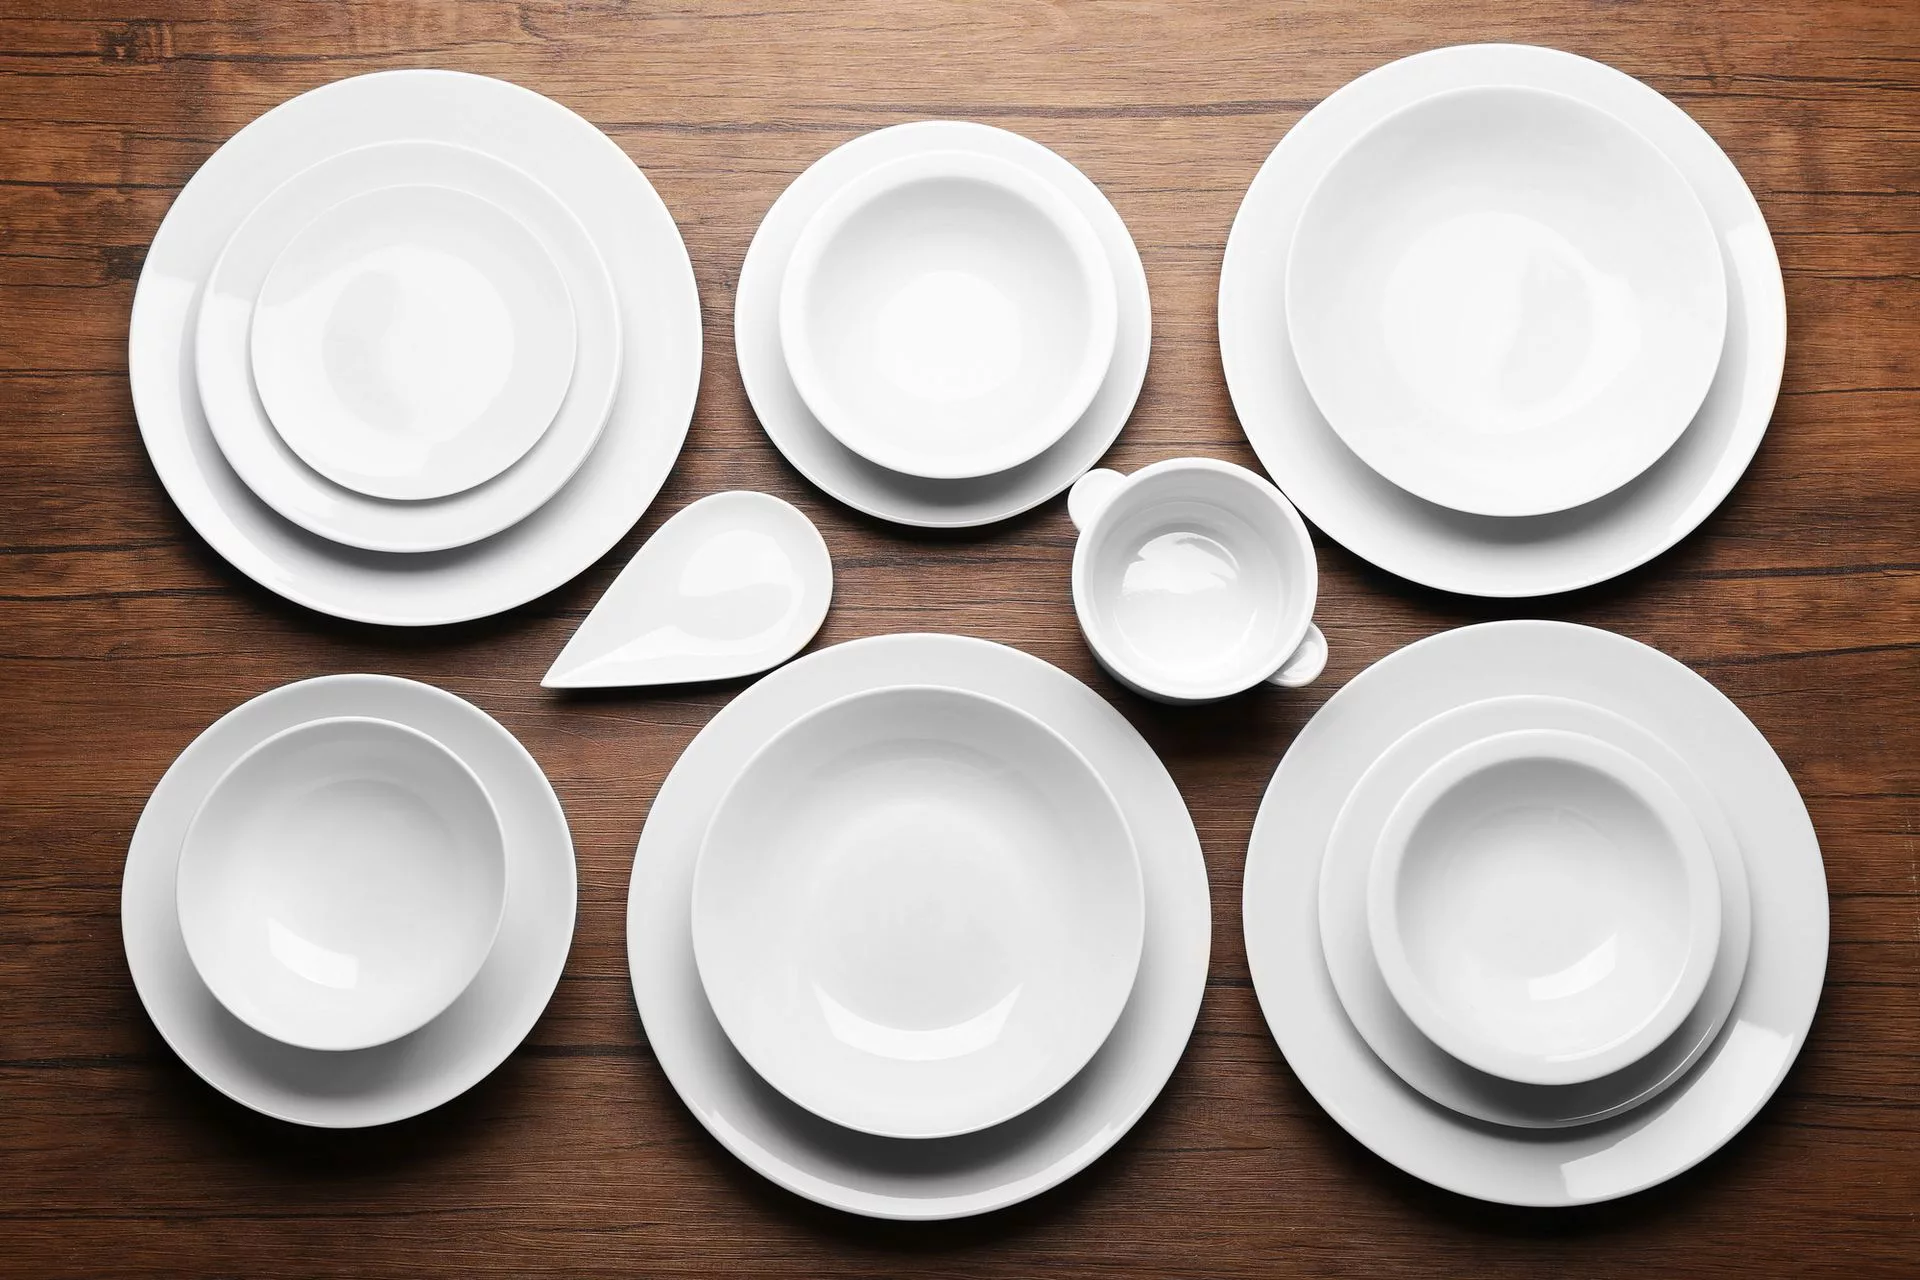 Лишняя тарелка на столе. Сервировка стола с белой посудой. Тарелки для сервировки стола. Белая тарелка. Тарелка на столе.